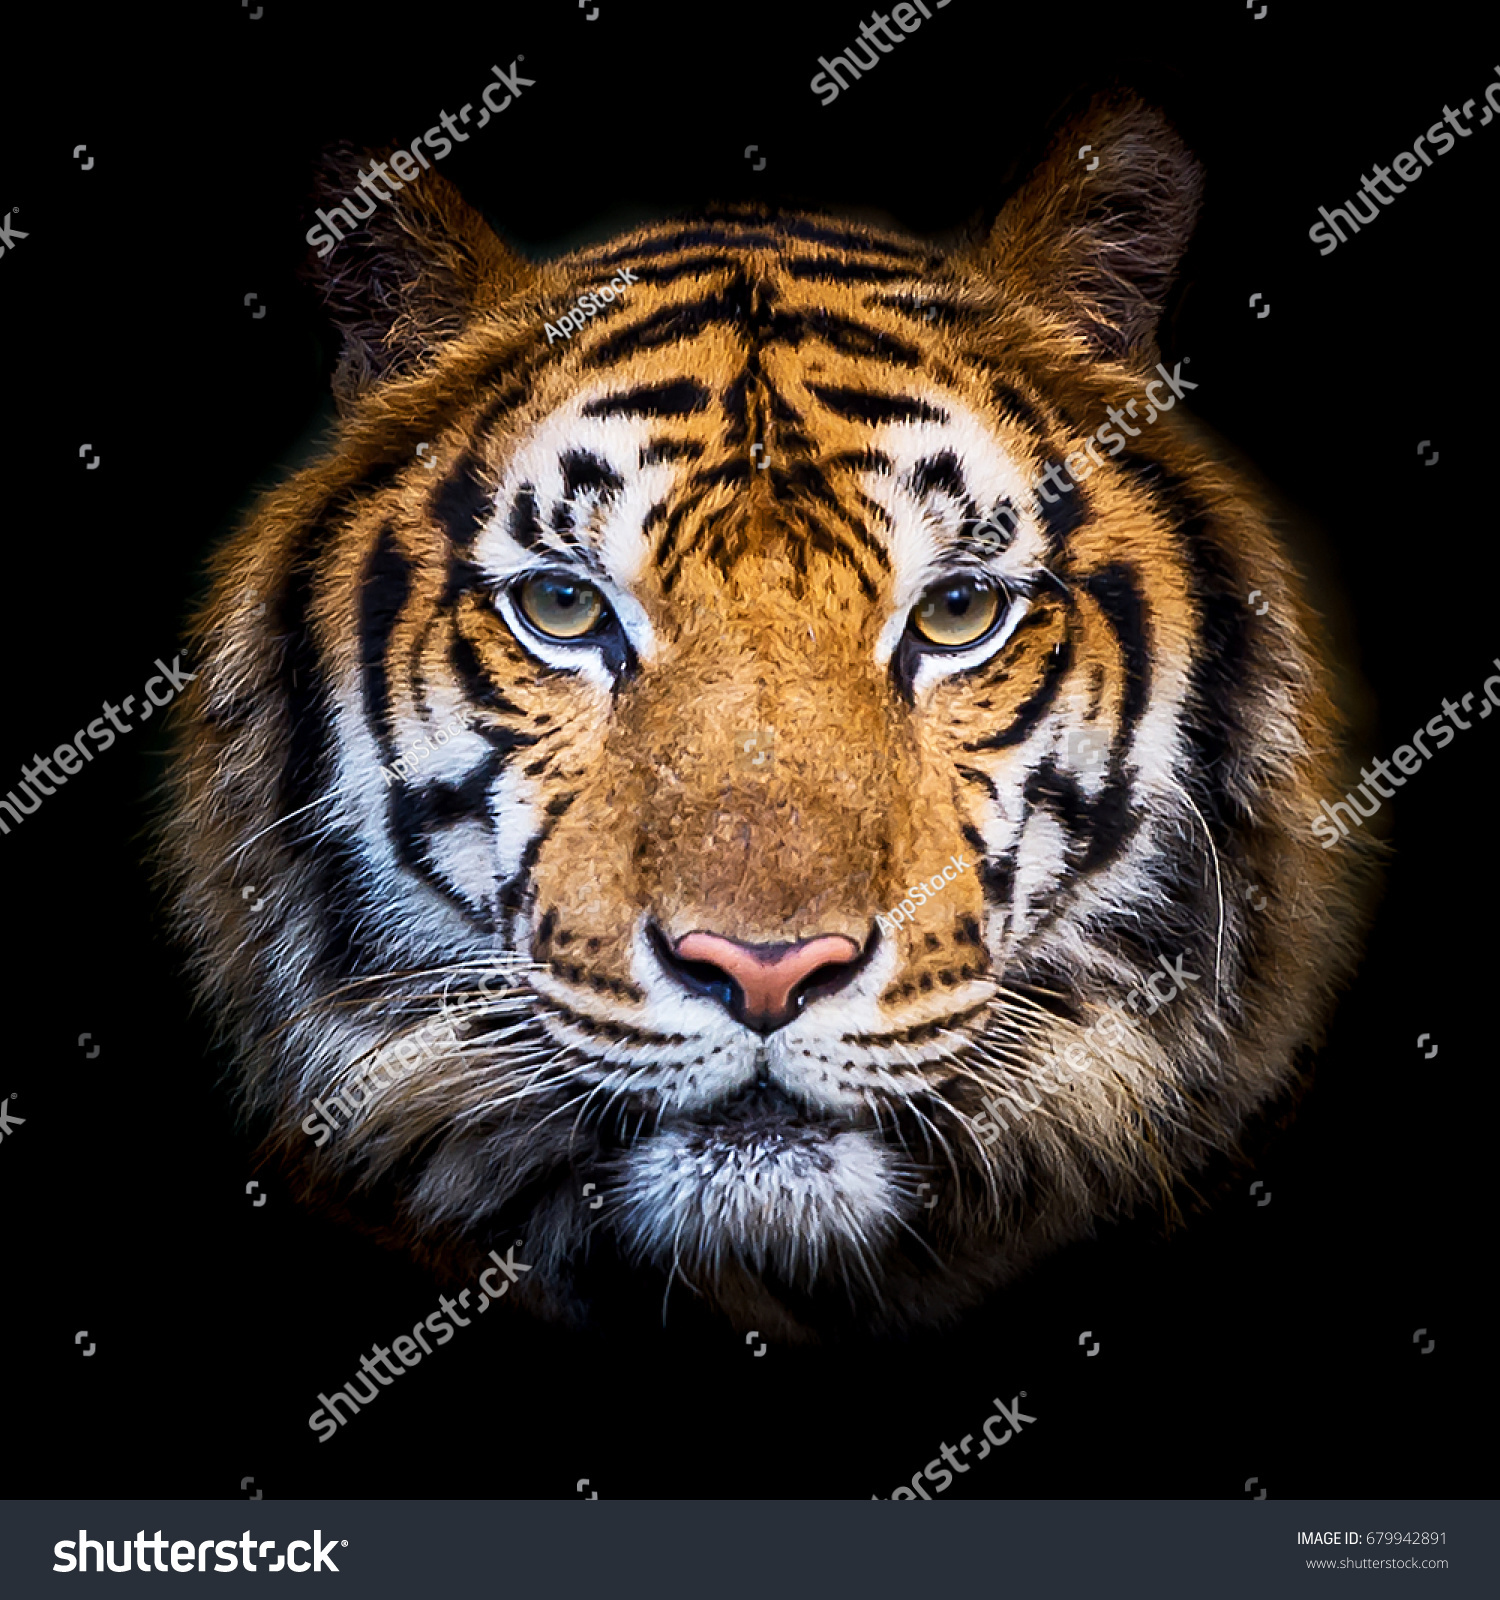 Headshot of Indochinese tiger (Panthera tigris corbetti) on black with copyspace.
 #679942891